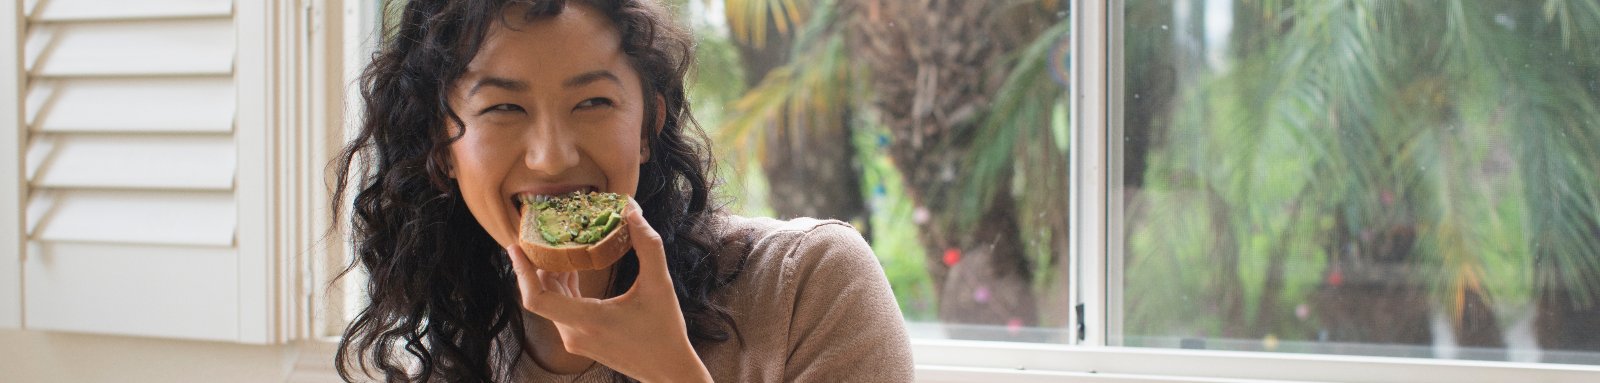 Woman eating avocado on bread